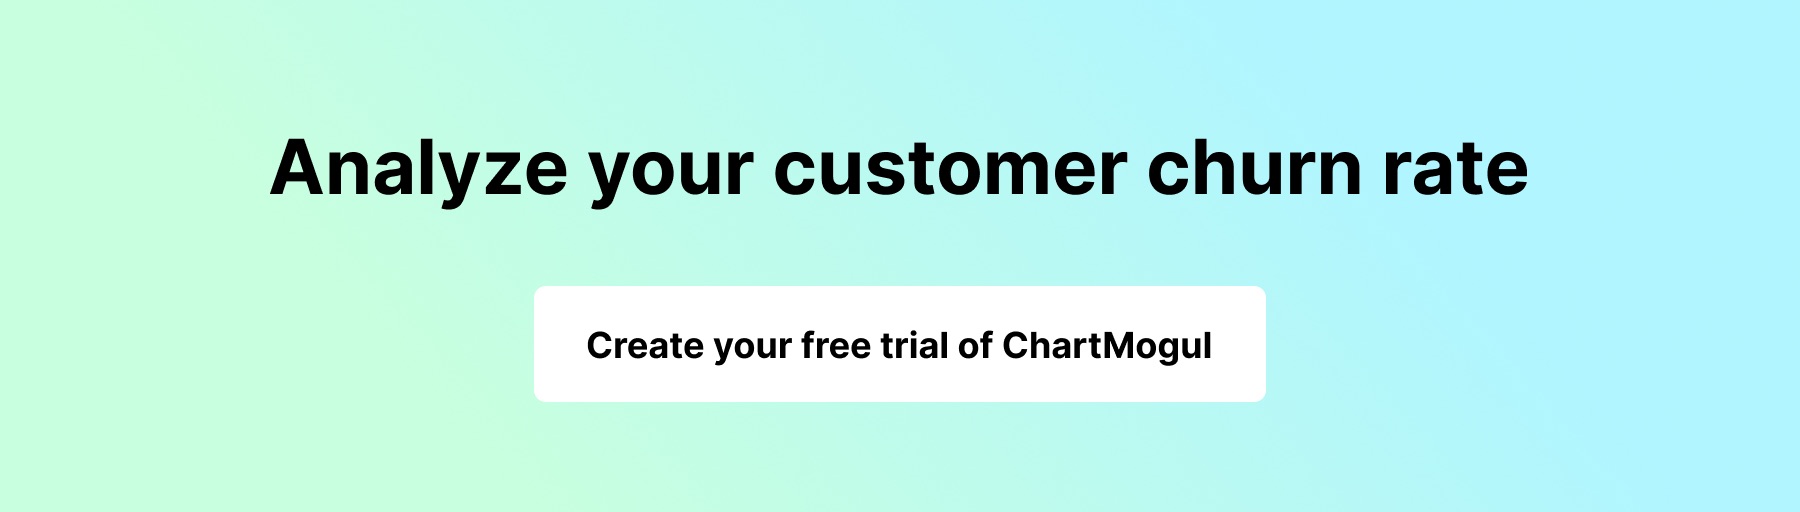 Analyze your customer churn rate